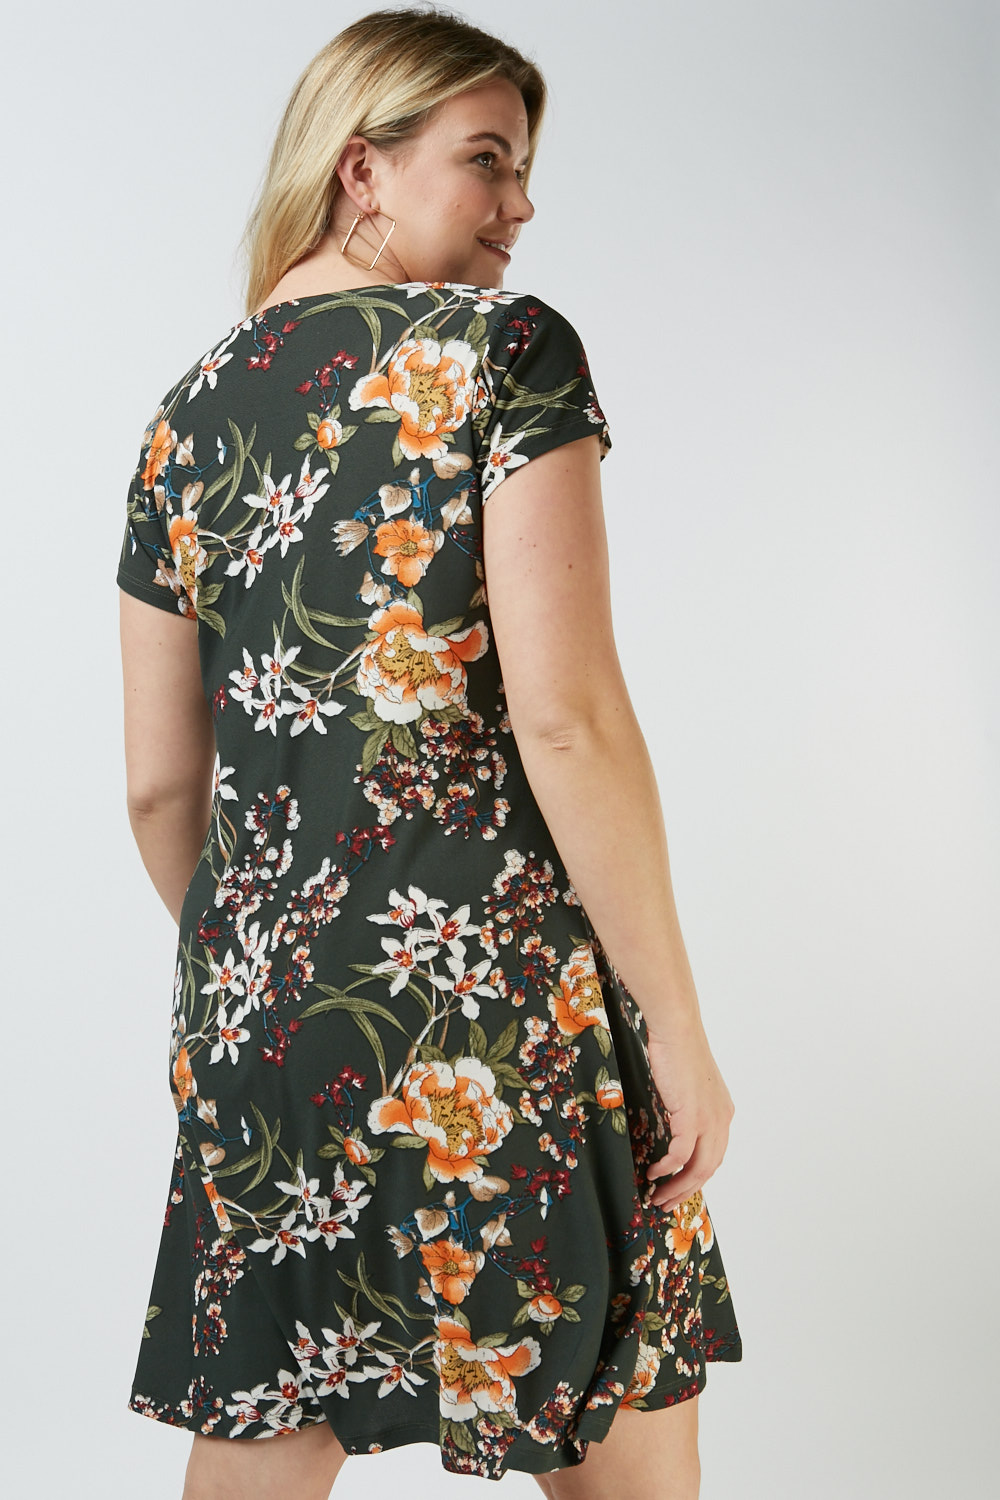 Botanical Print Tunic Dress - Just $7